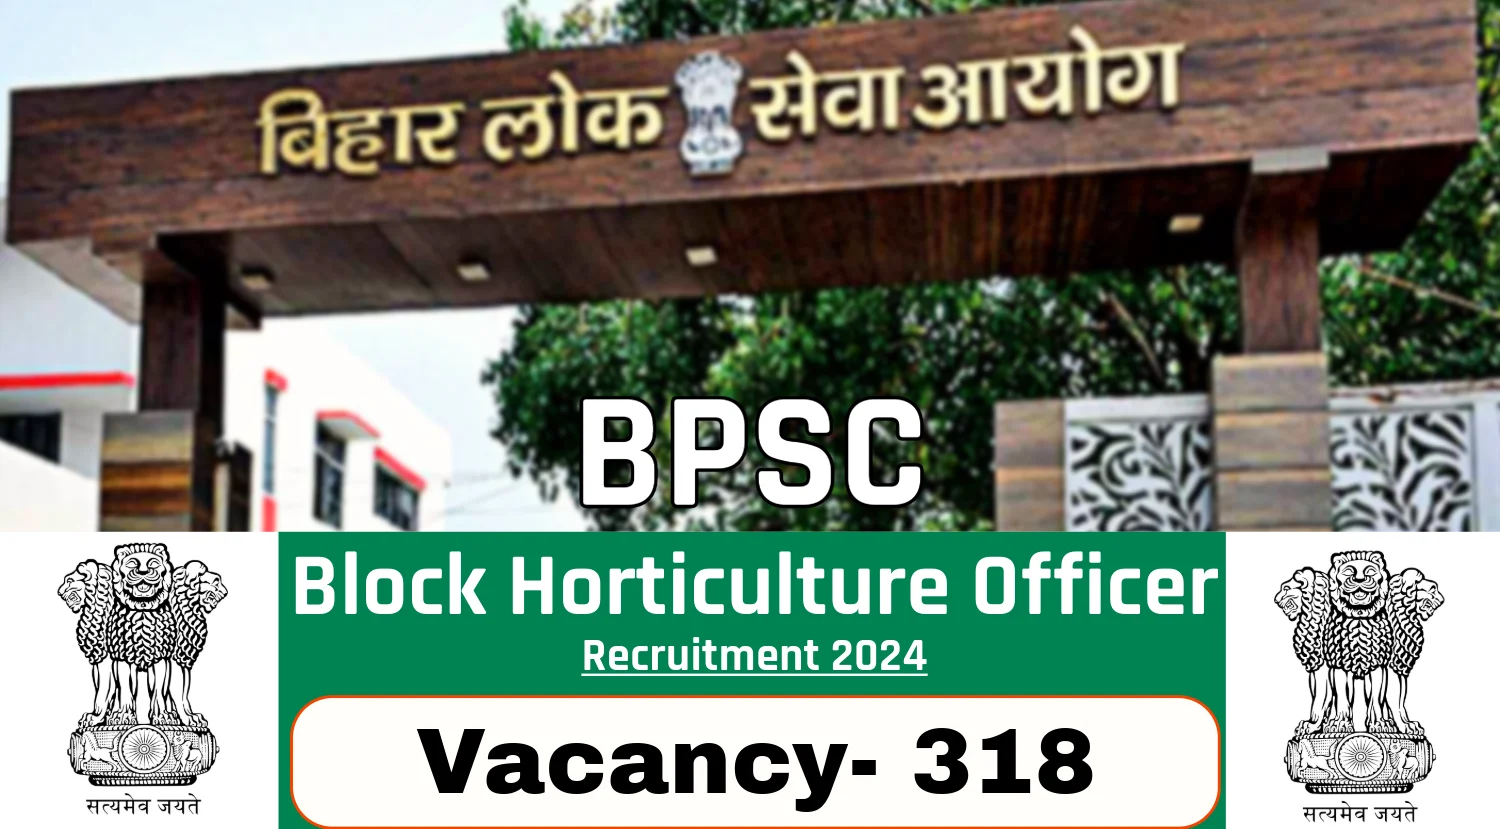 BPSC Block Horticulture Officer Recruitment 2024 for 318 P